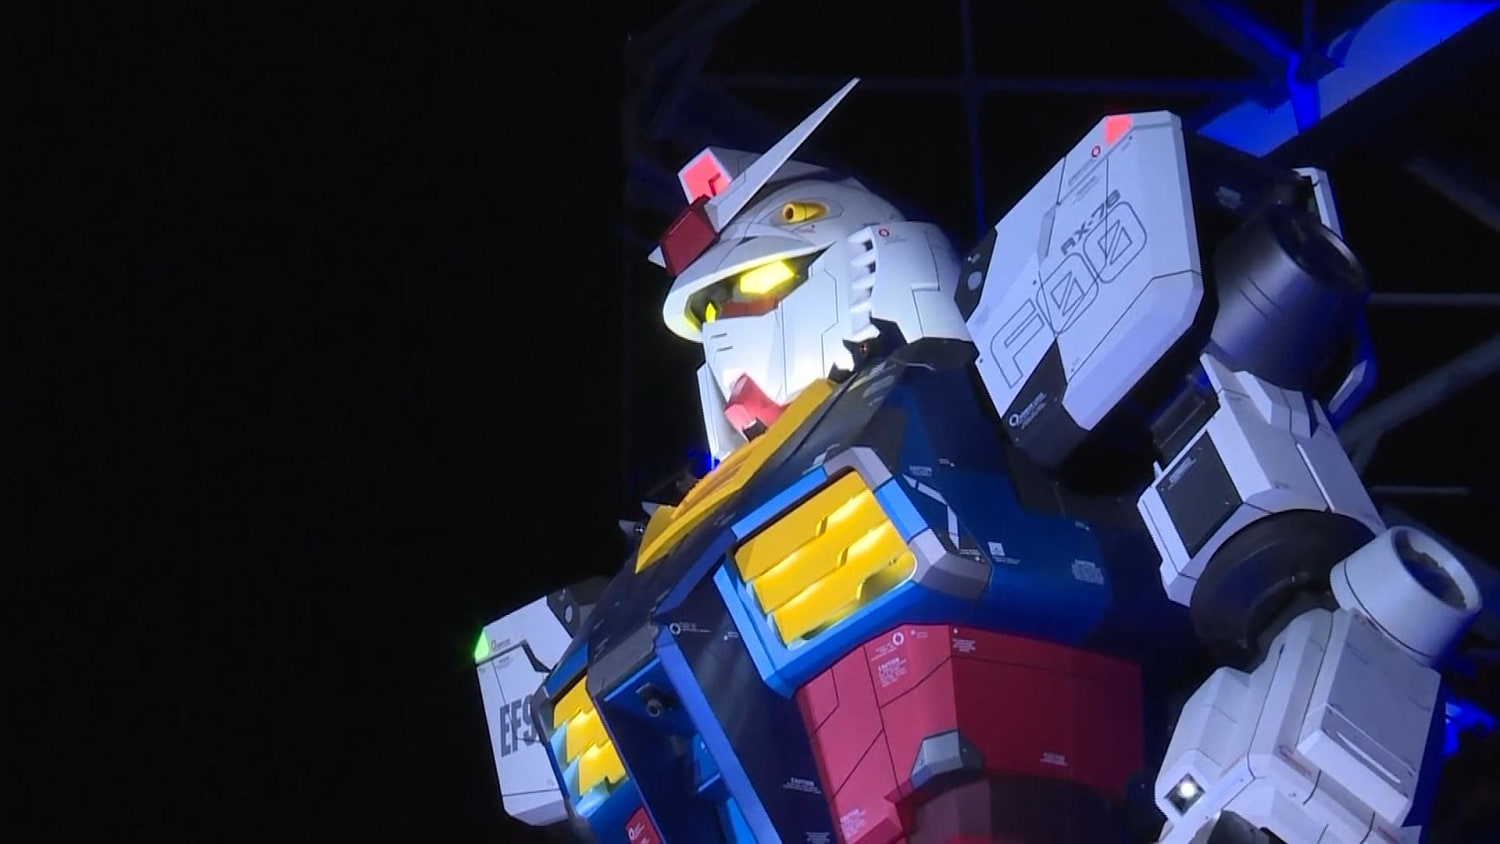 Japan unveils 60-foot robot based on popular anime series